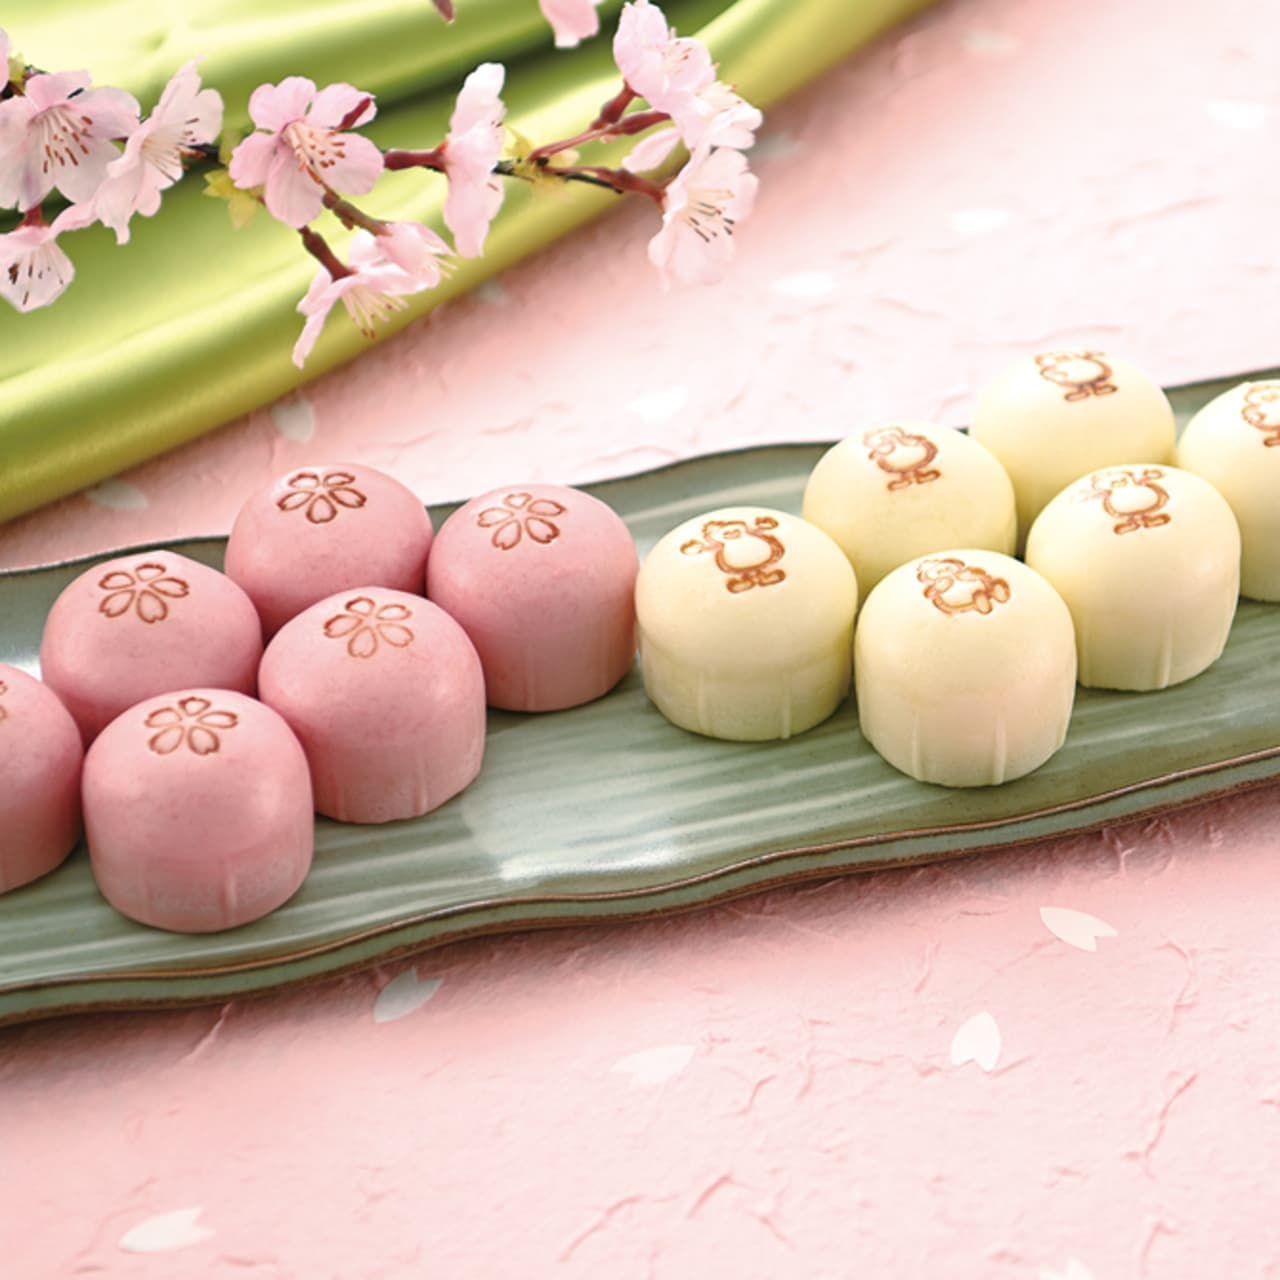 Sakiyo-ken "Cherry blossom viewing season limited shioumai man & sakura man" frozen product